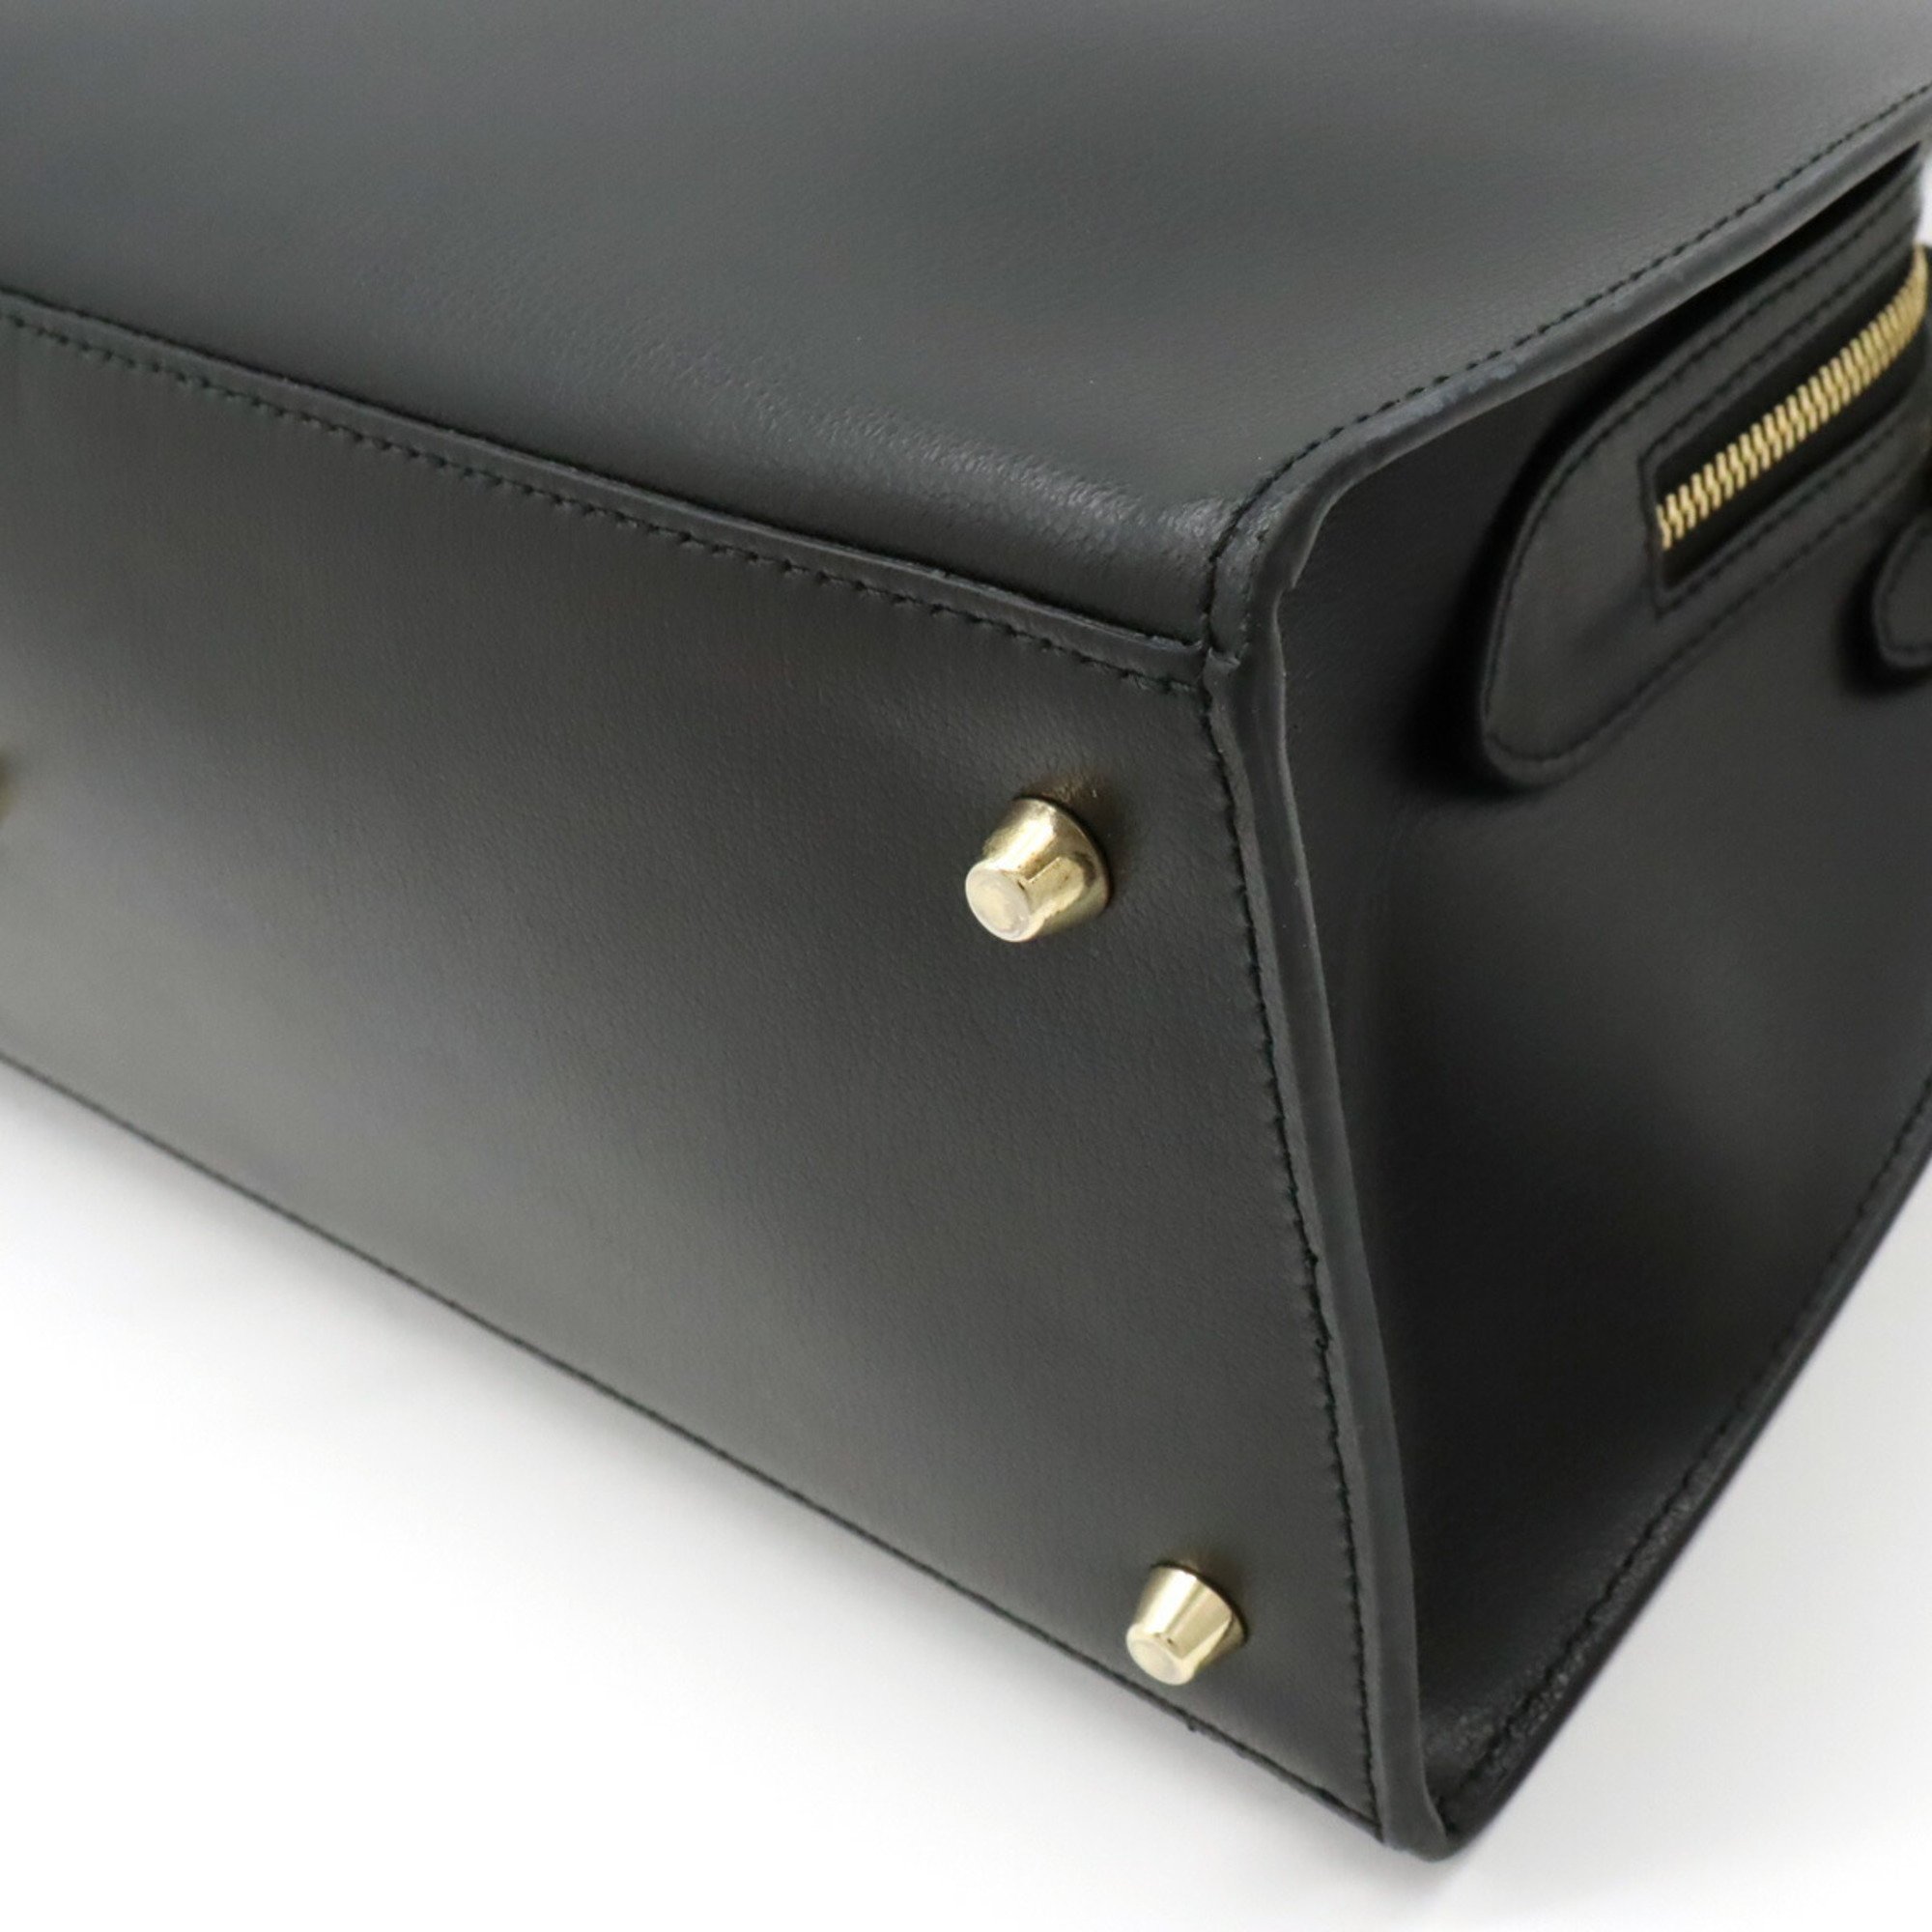 FURLA DORIS M handbag shoulder bag leather black